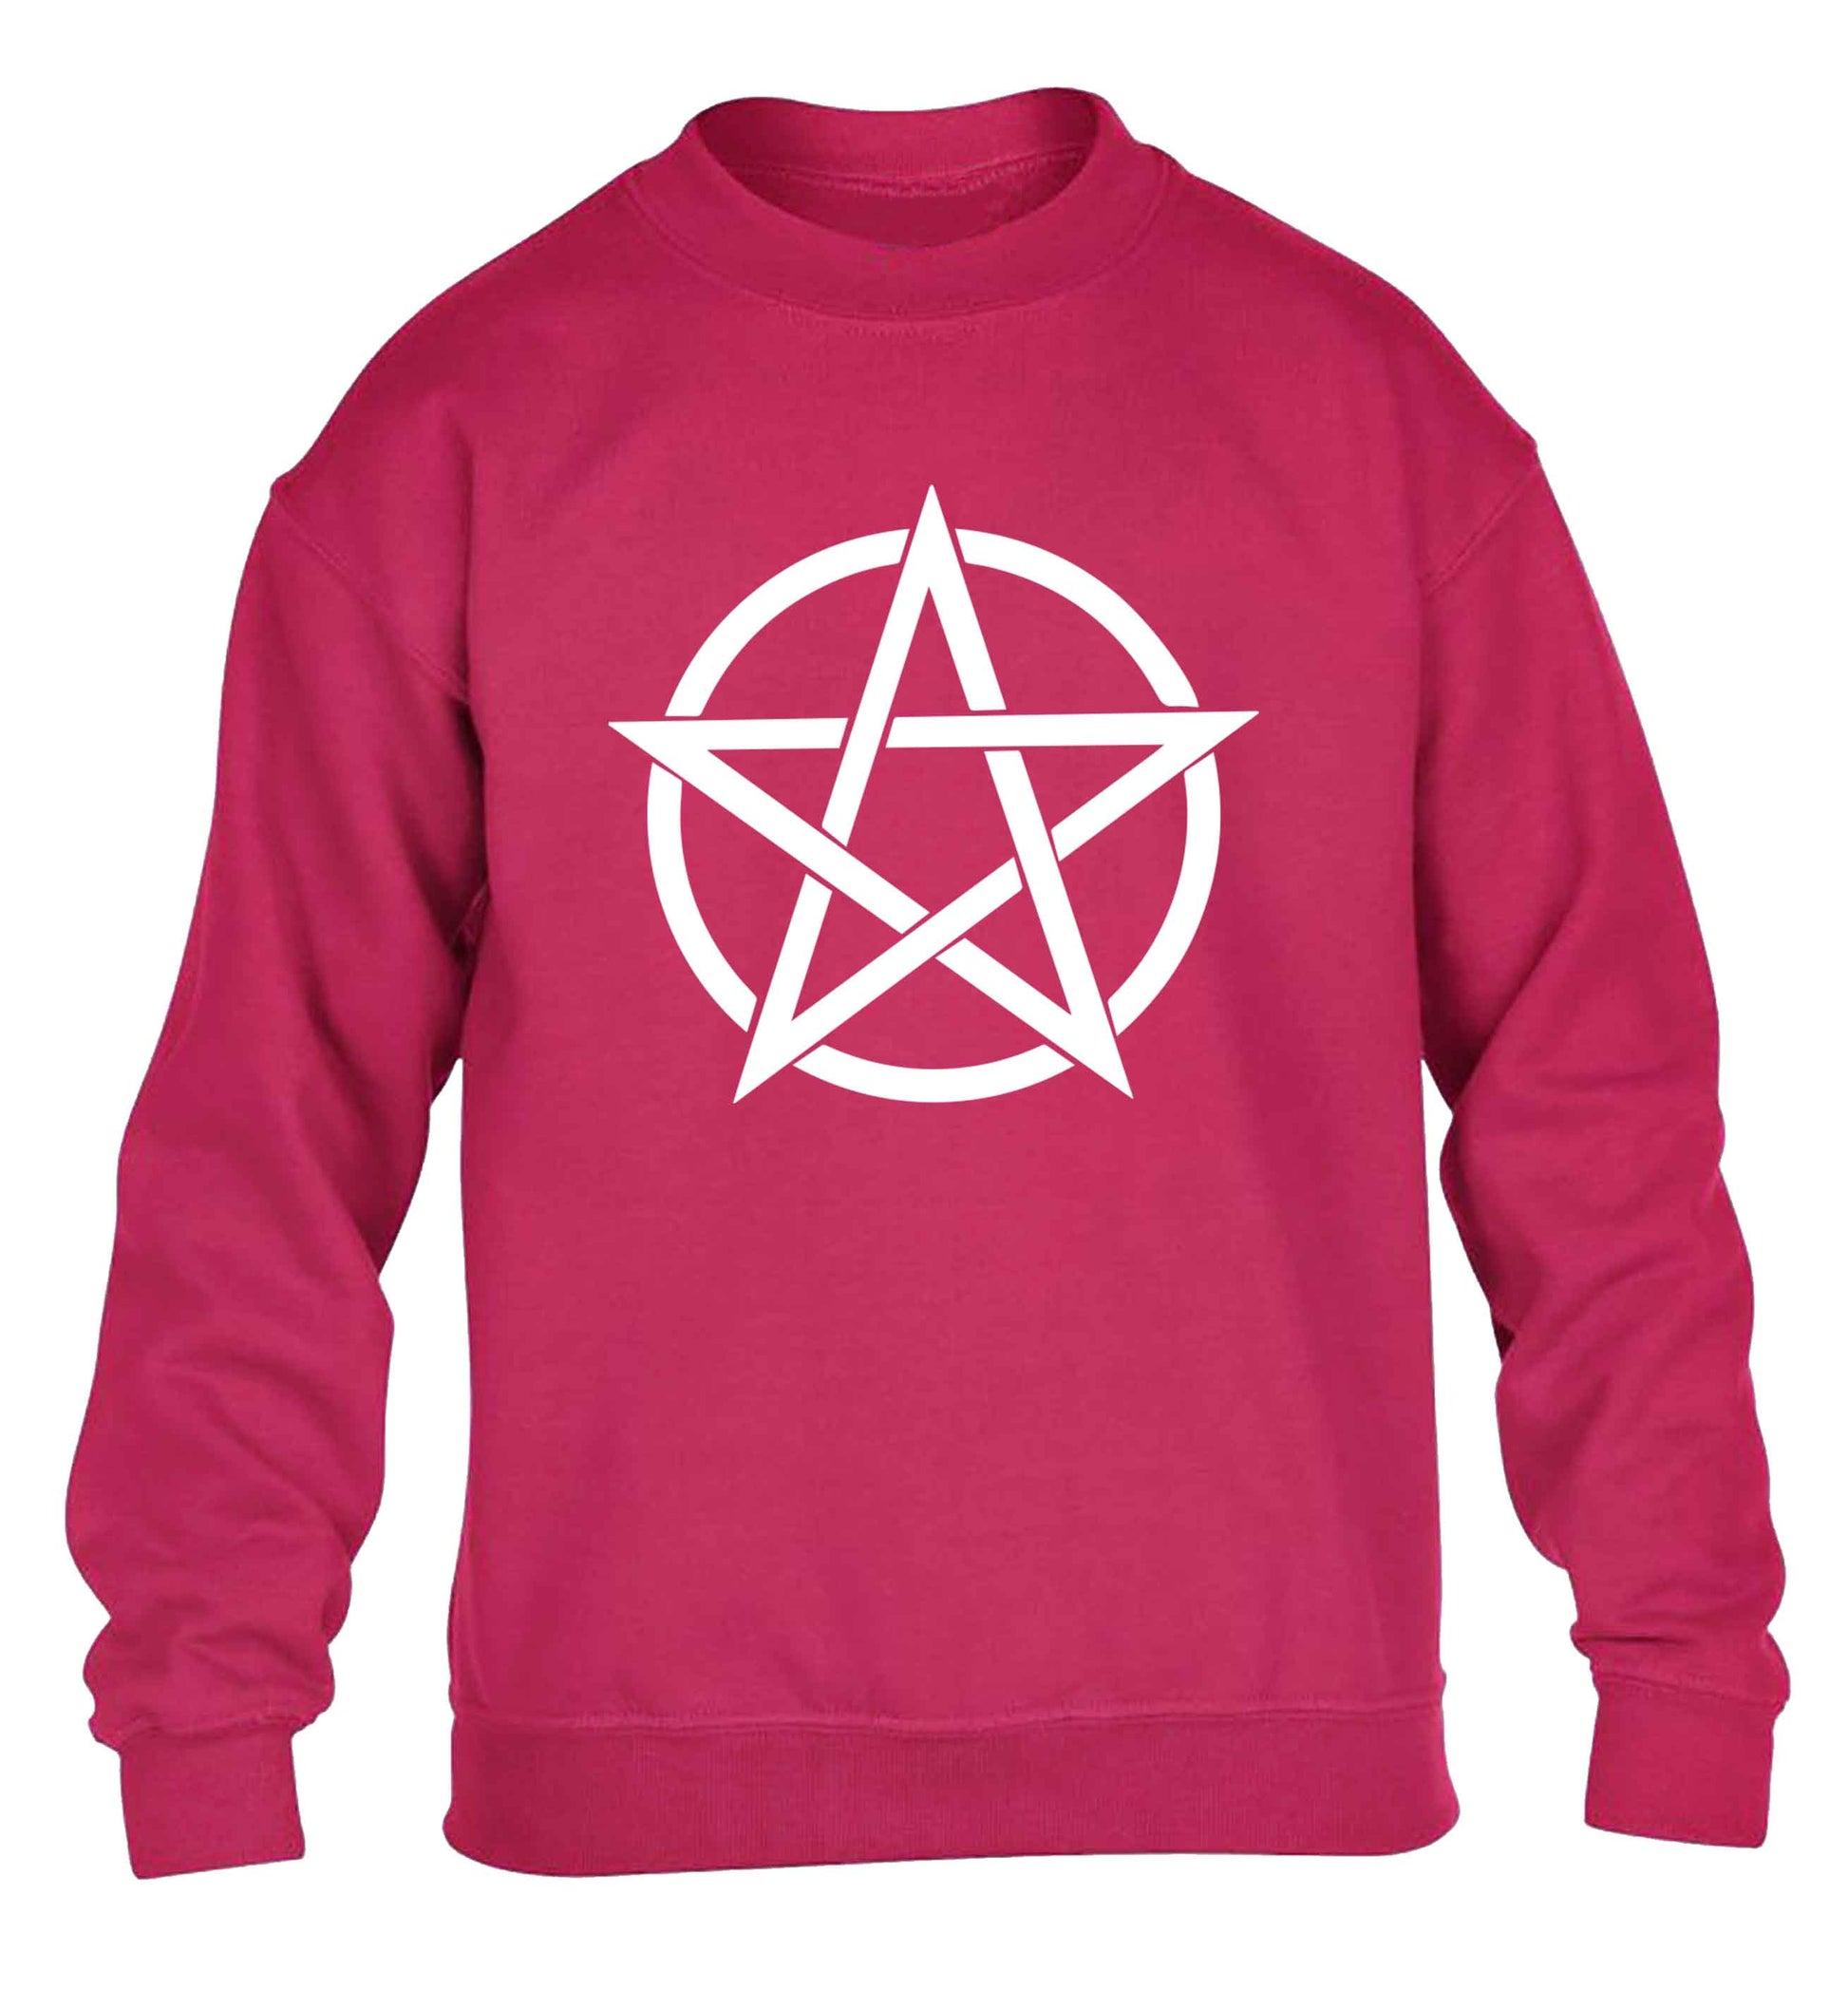 Pentagram symbol children's pink sweater 12-13 Years